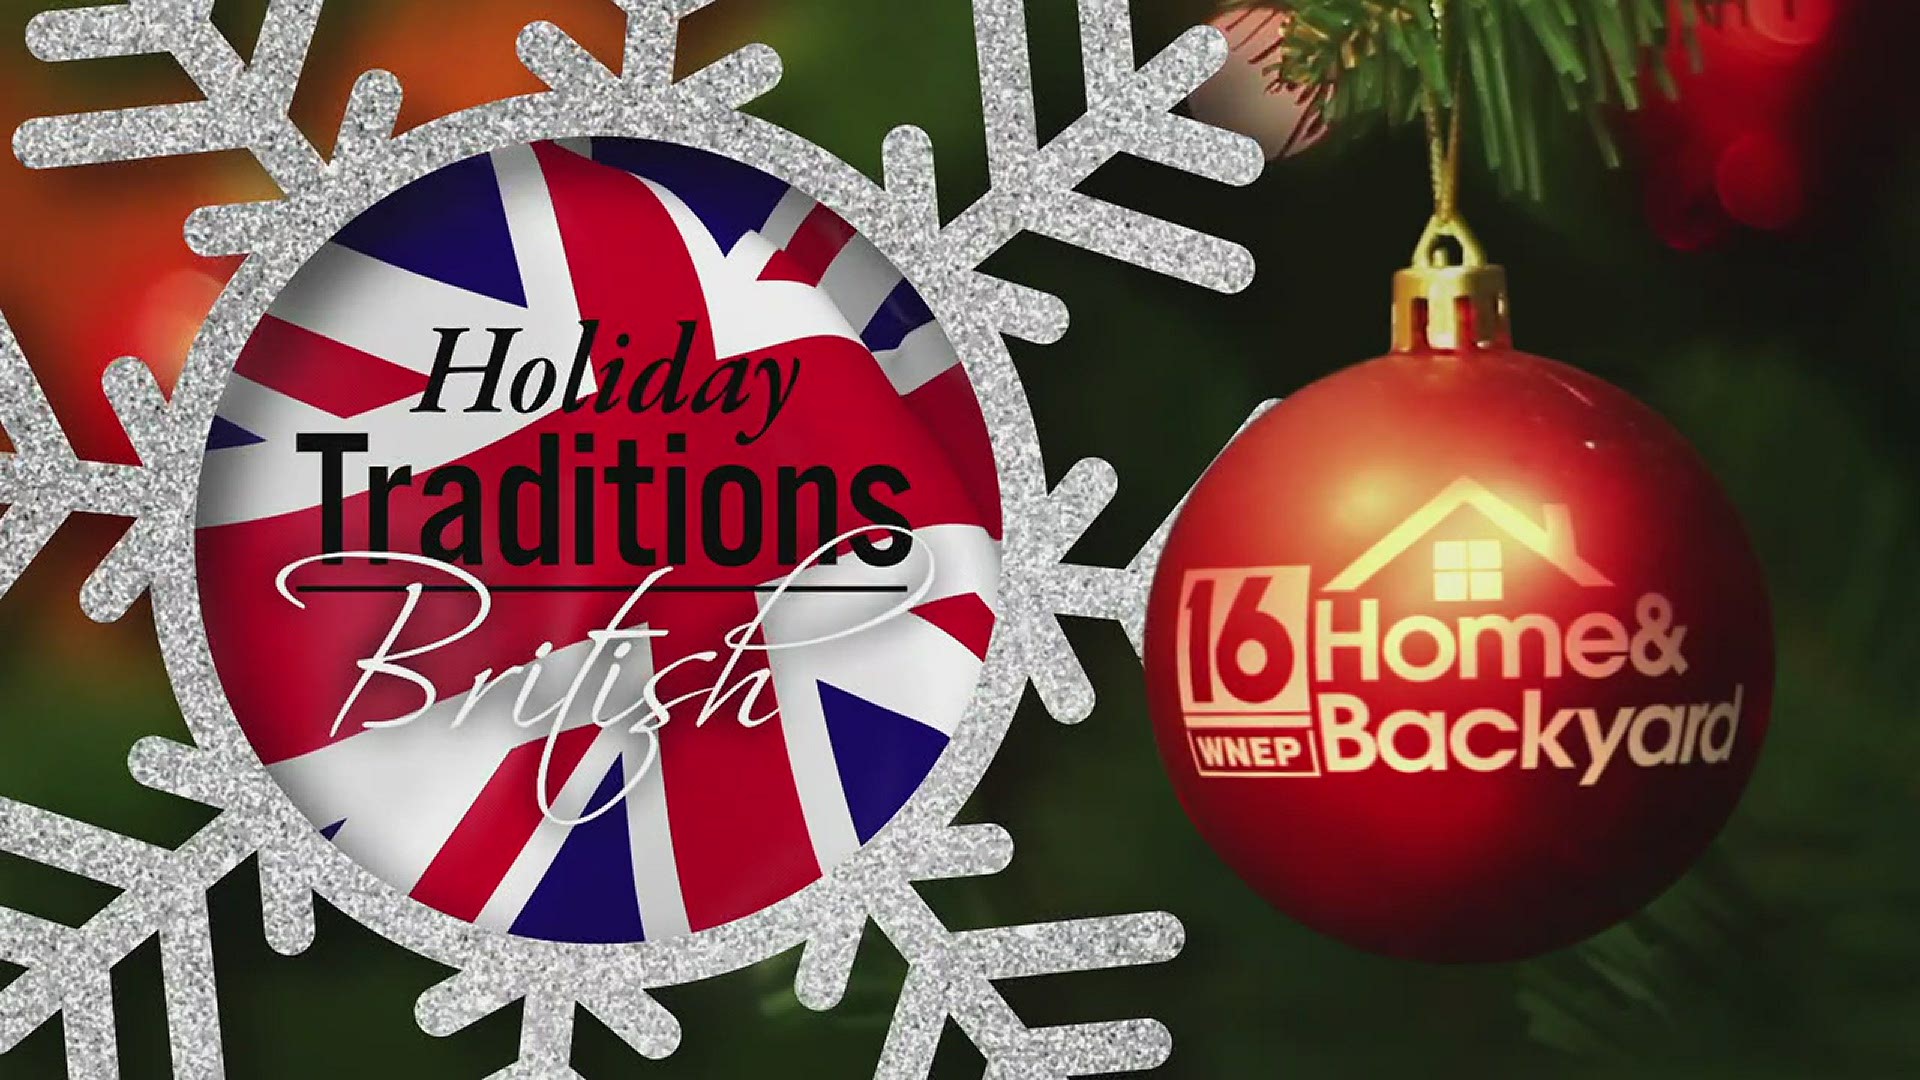 Christmas Traditions Part 4: British